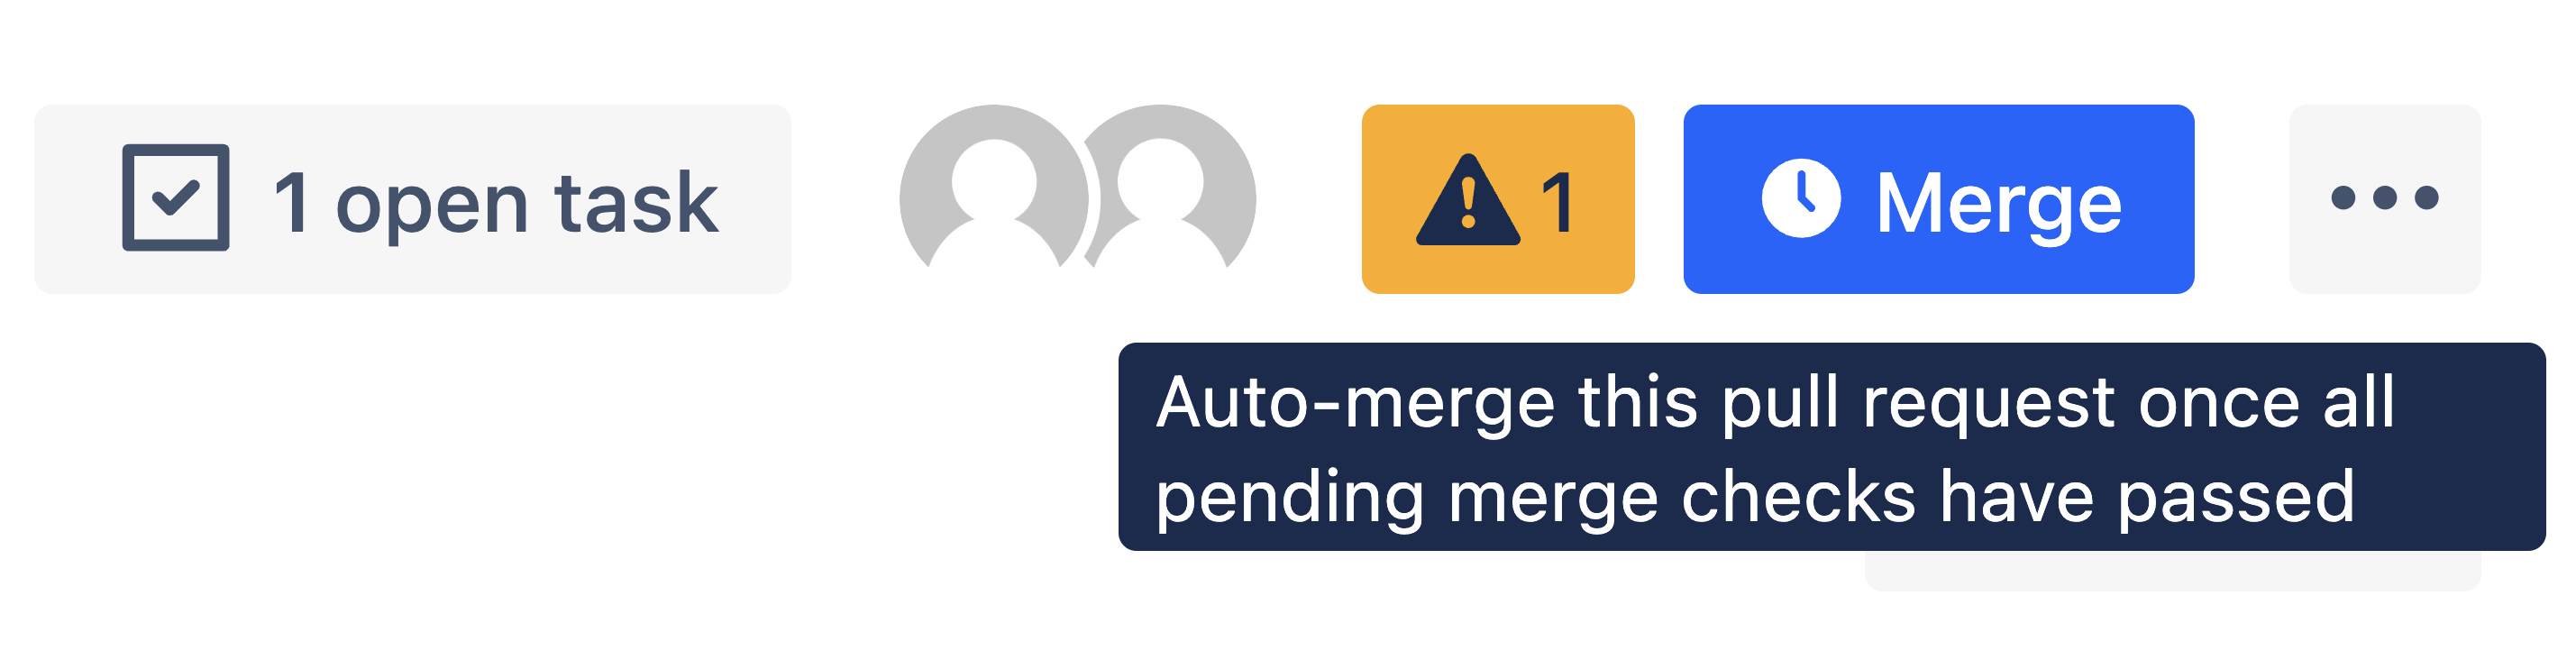 Auto-merge pull request